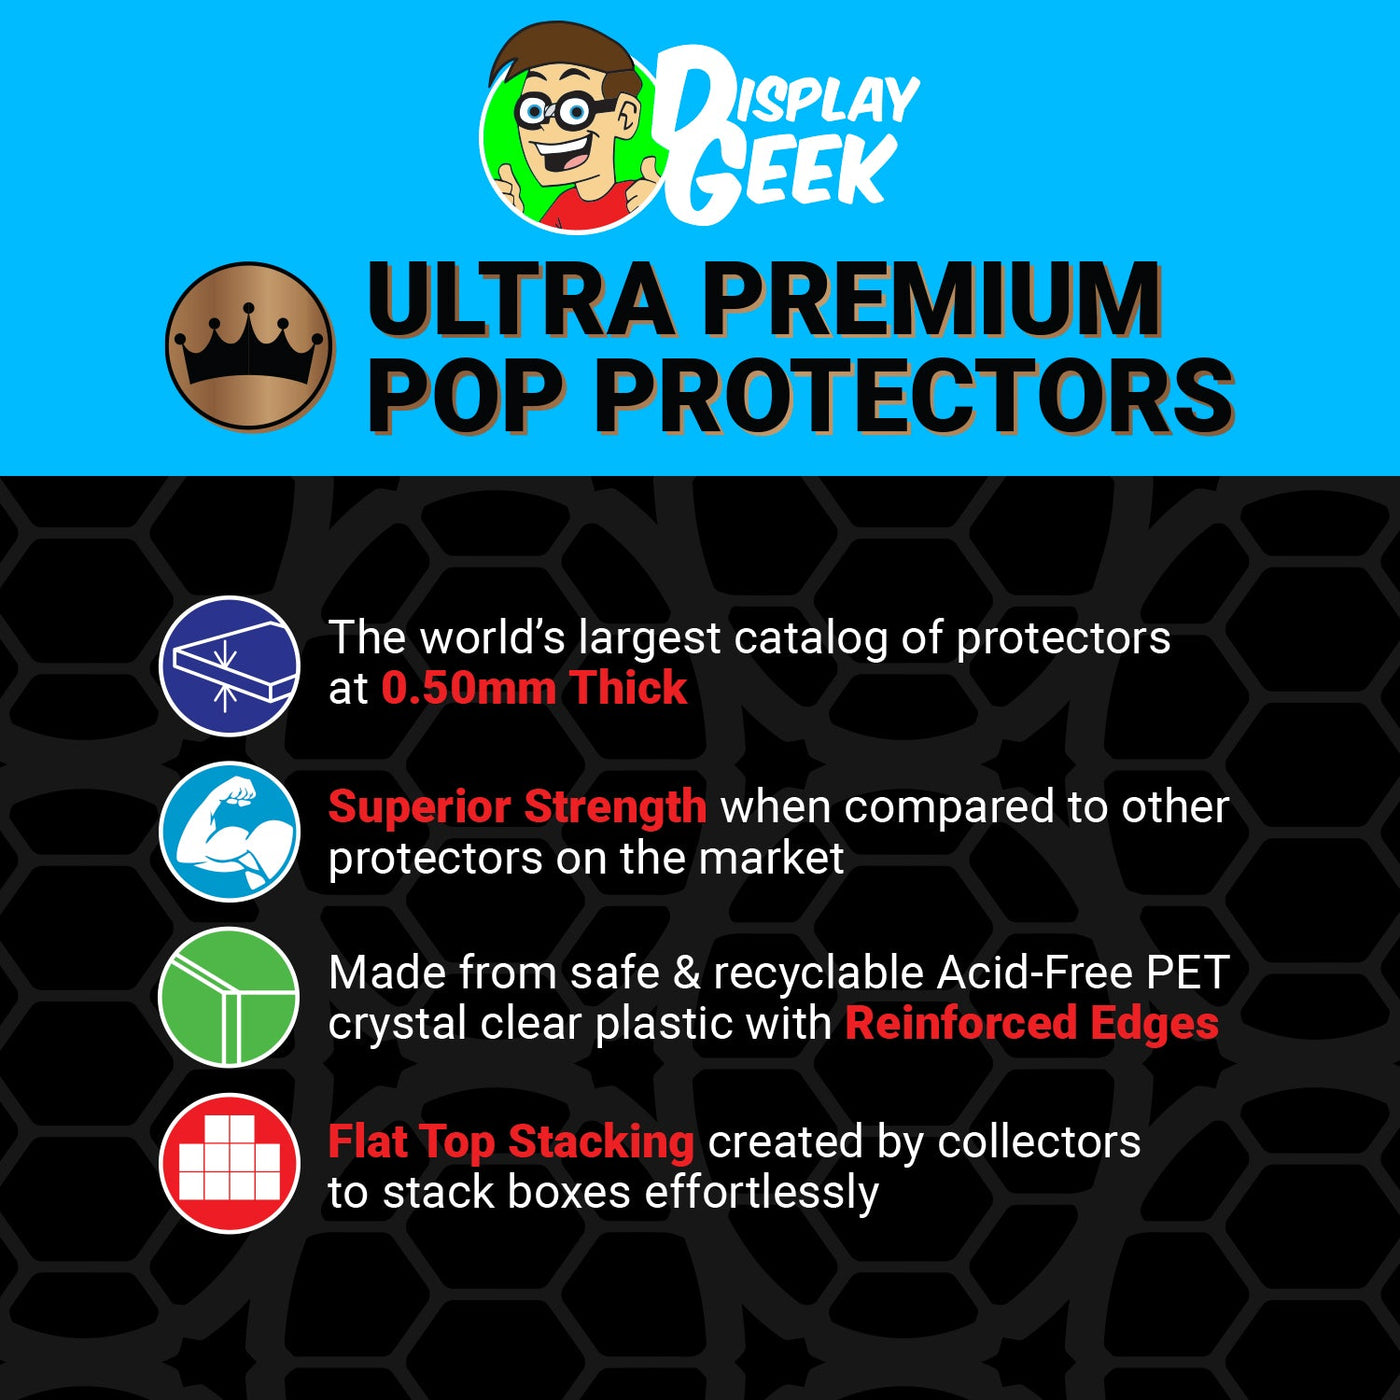 Pop Protector for 10 inch Bullseye Target #32 Jumbo Funko Pop on The Protector Guide App by Display Geek